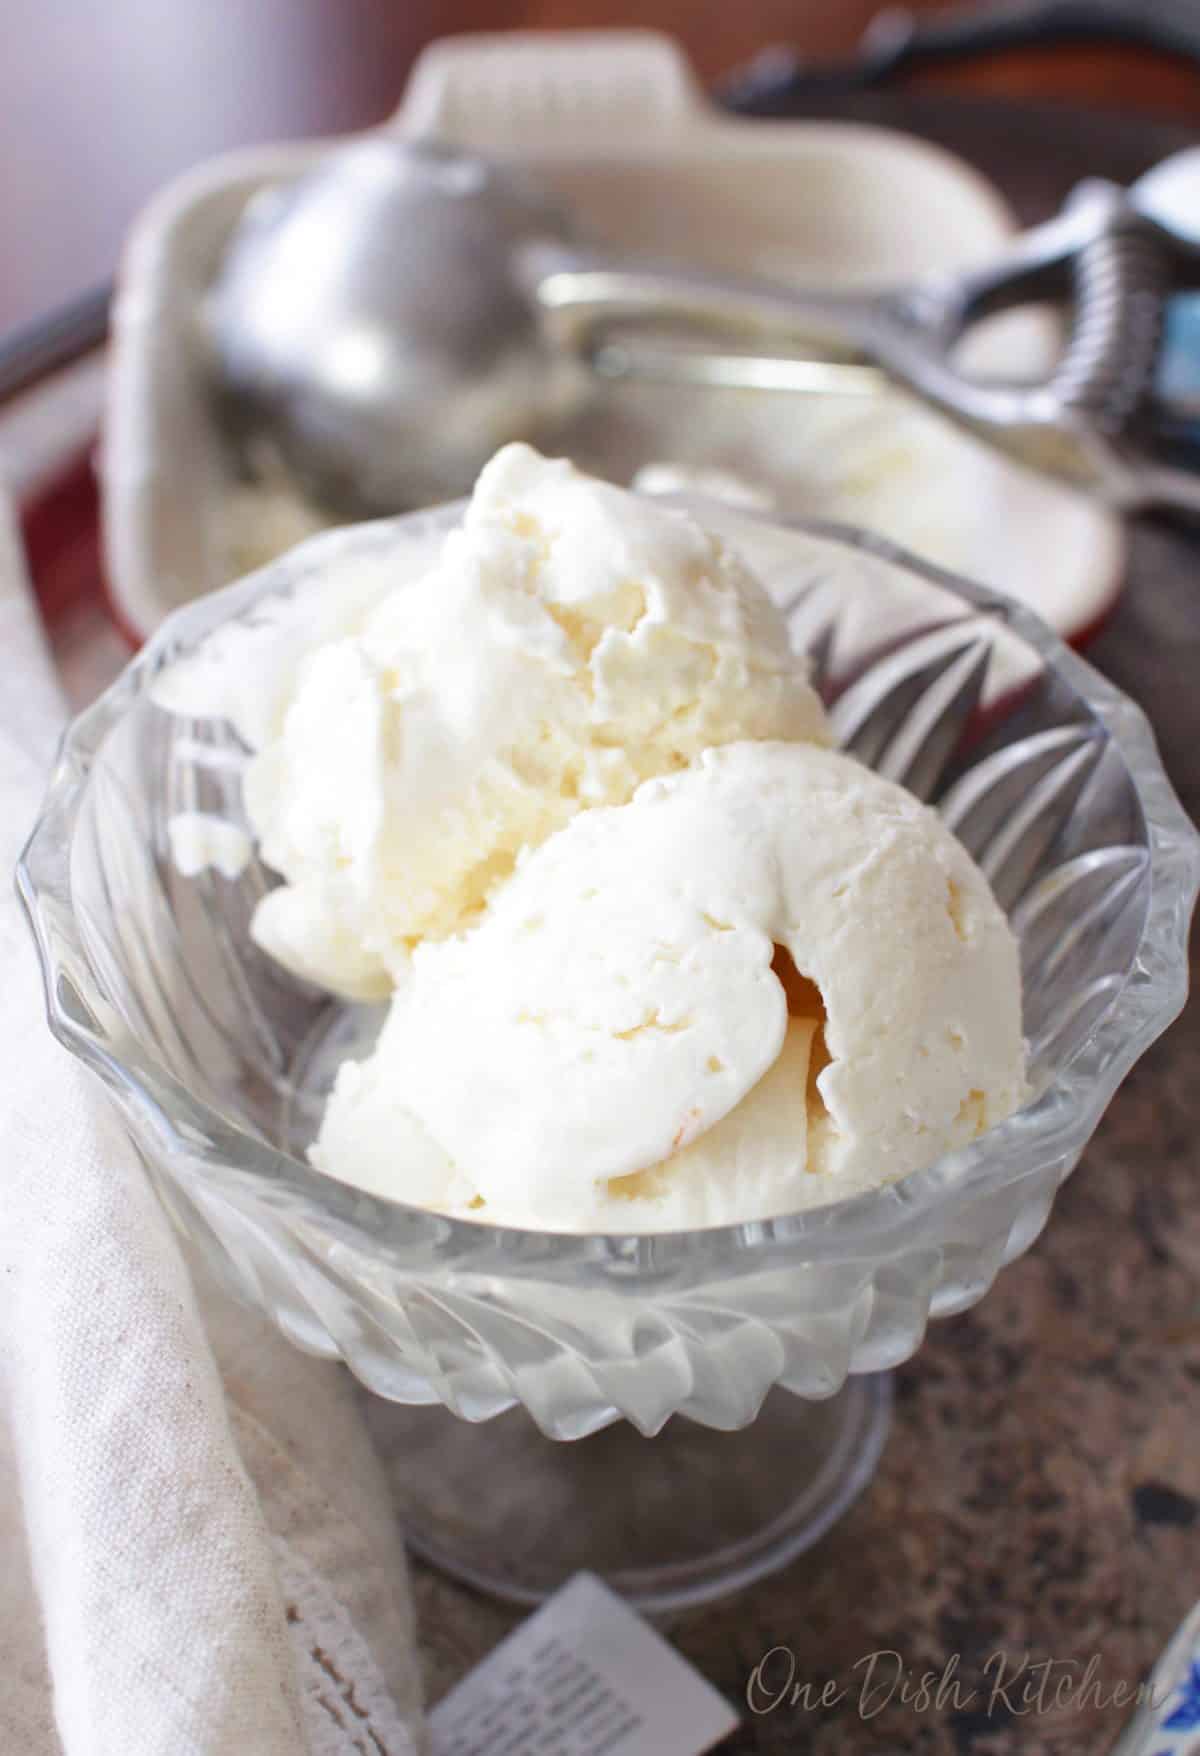 Vanilla ice cream in a dessert glass next to an ice cream scooper.